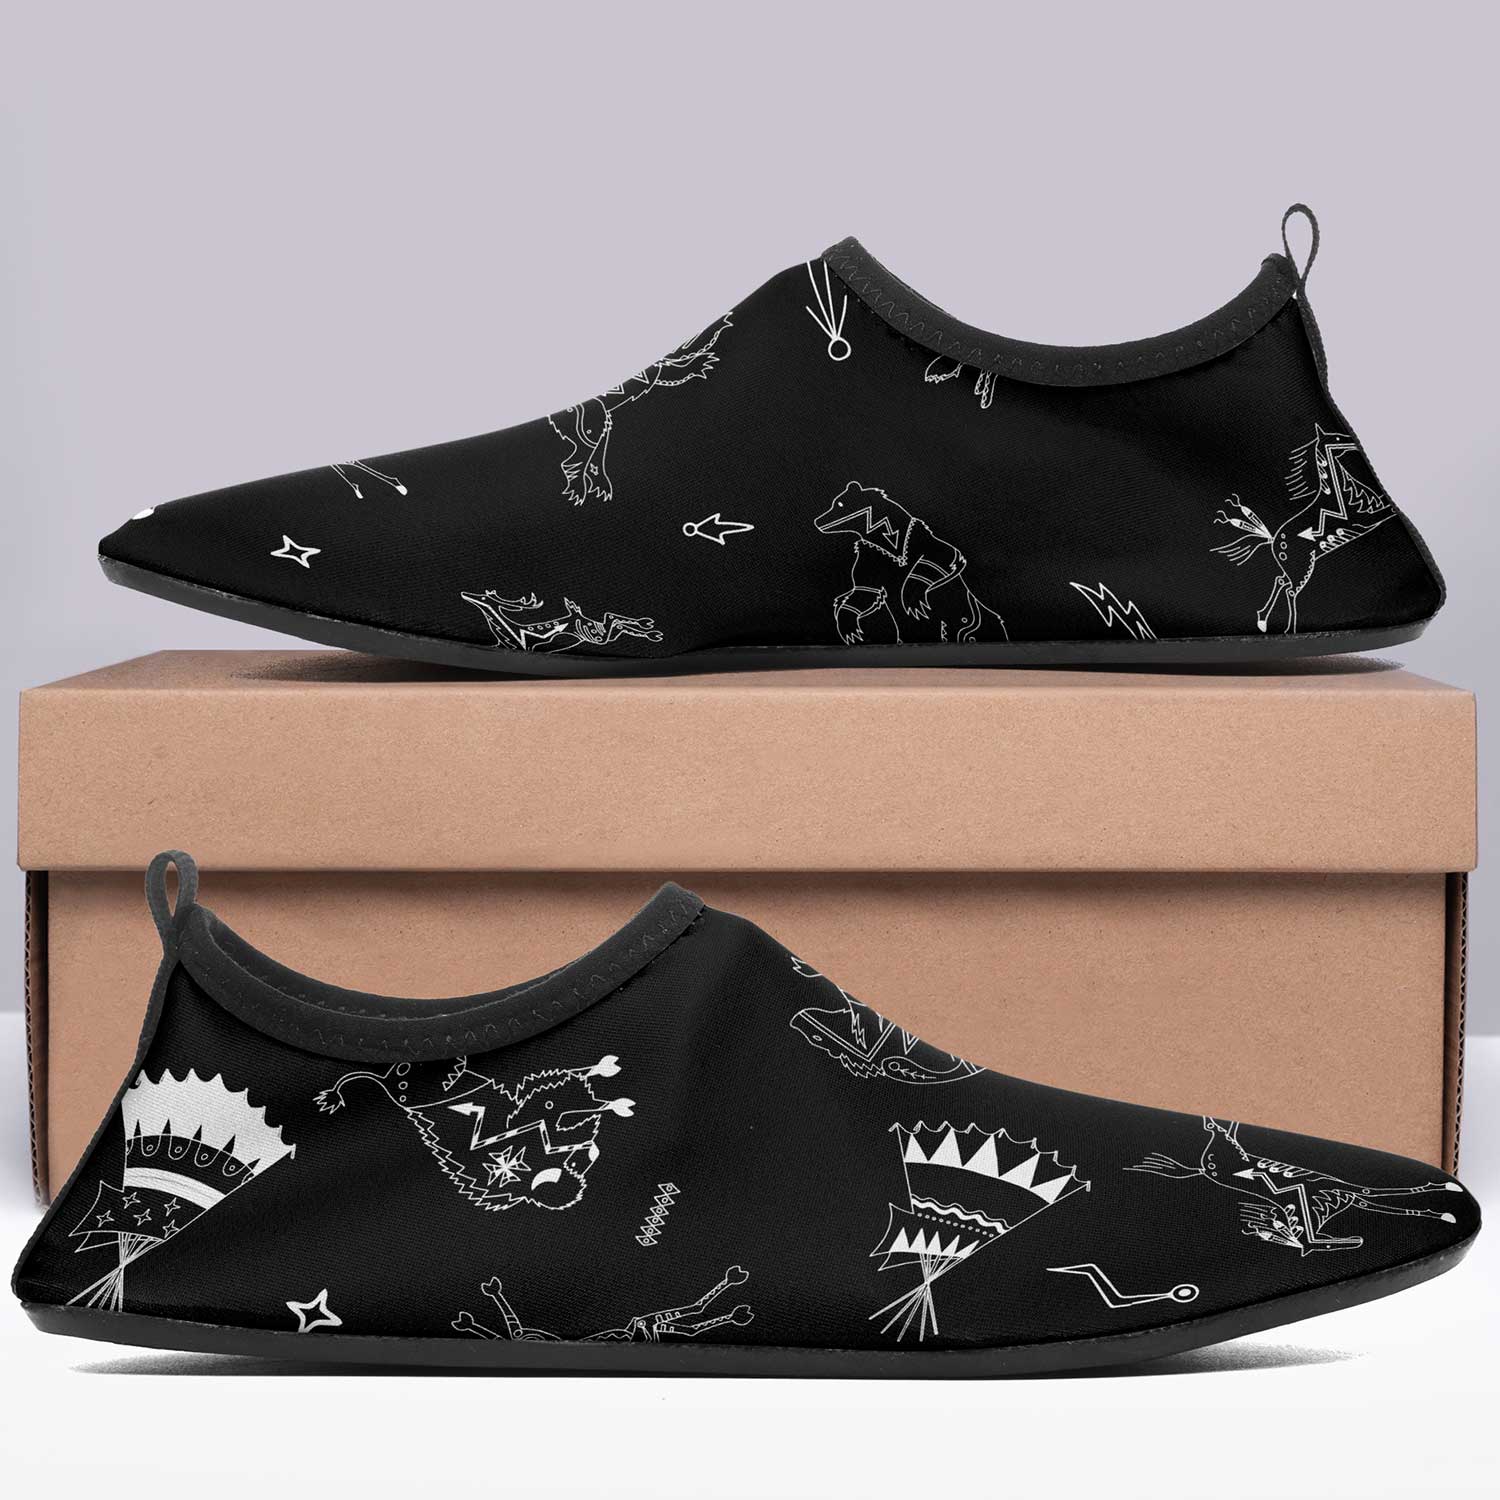 Ledger Dabbles Black Kid's Sockamoccs Slip On Shoes